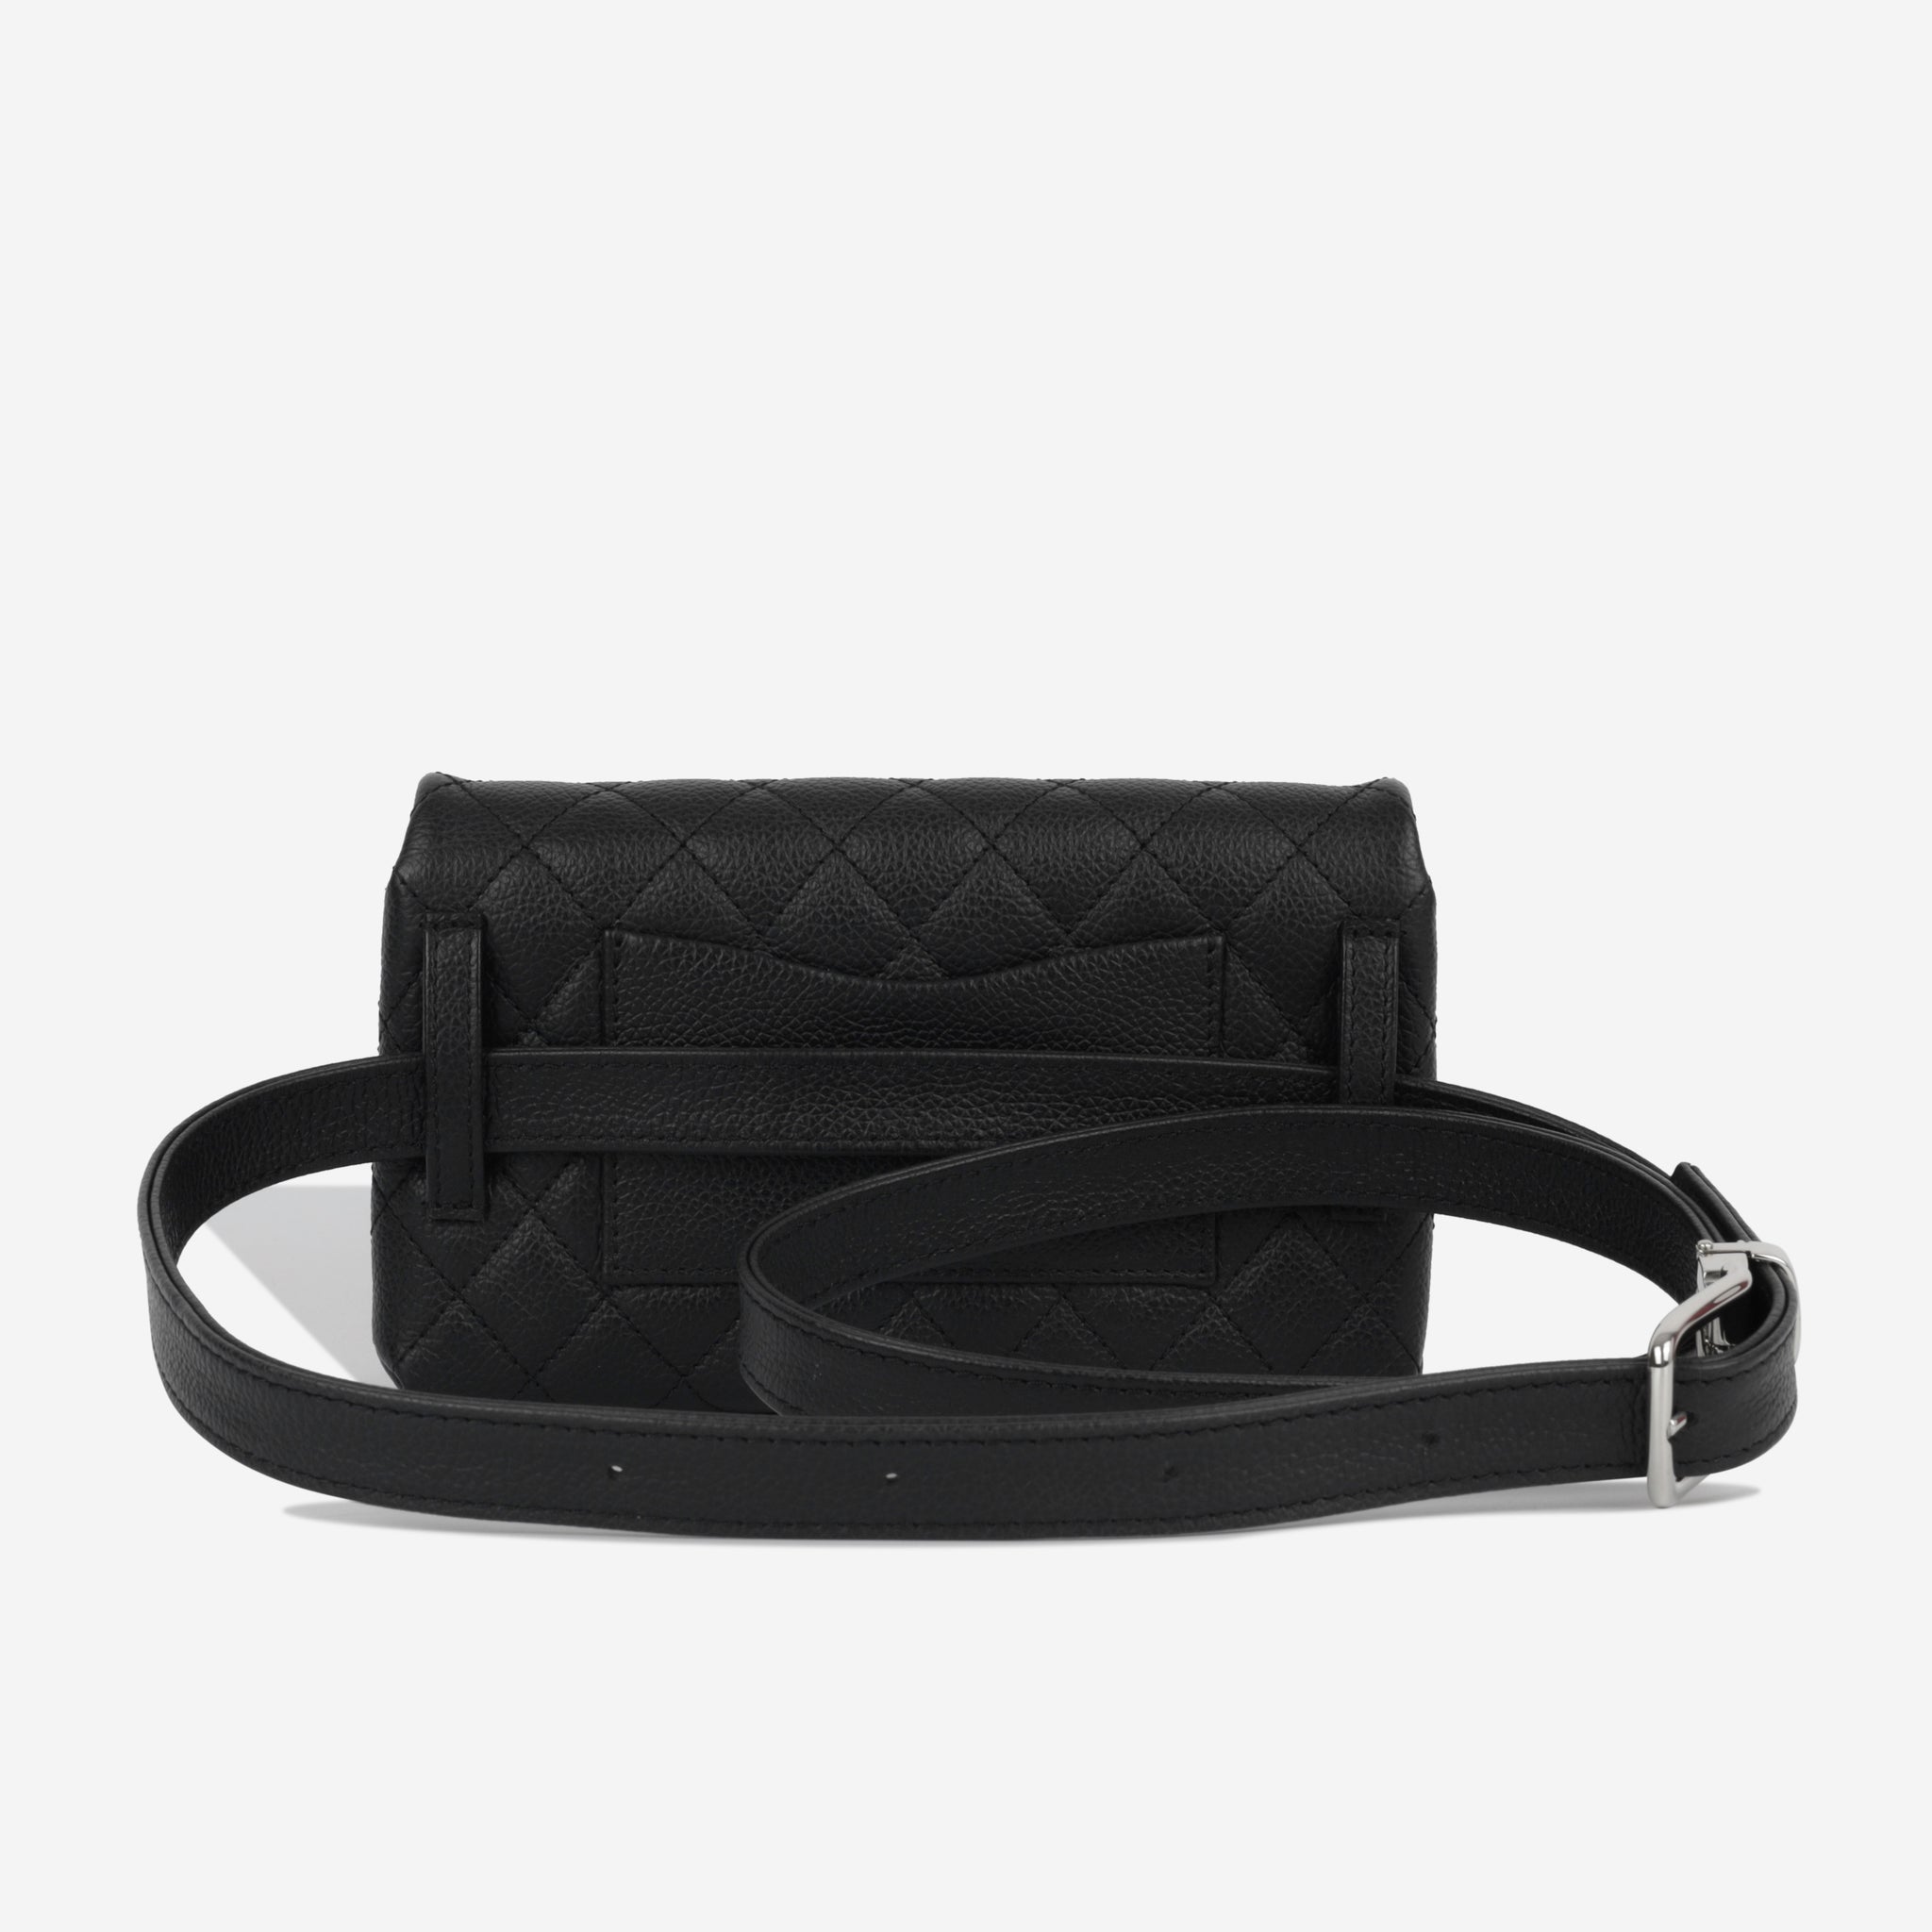 Chanel - Re-issue Uniform Belt Bag - Black Caviar SHW - Pre-Loved